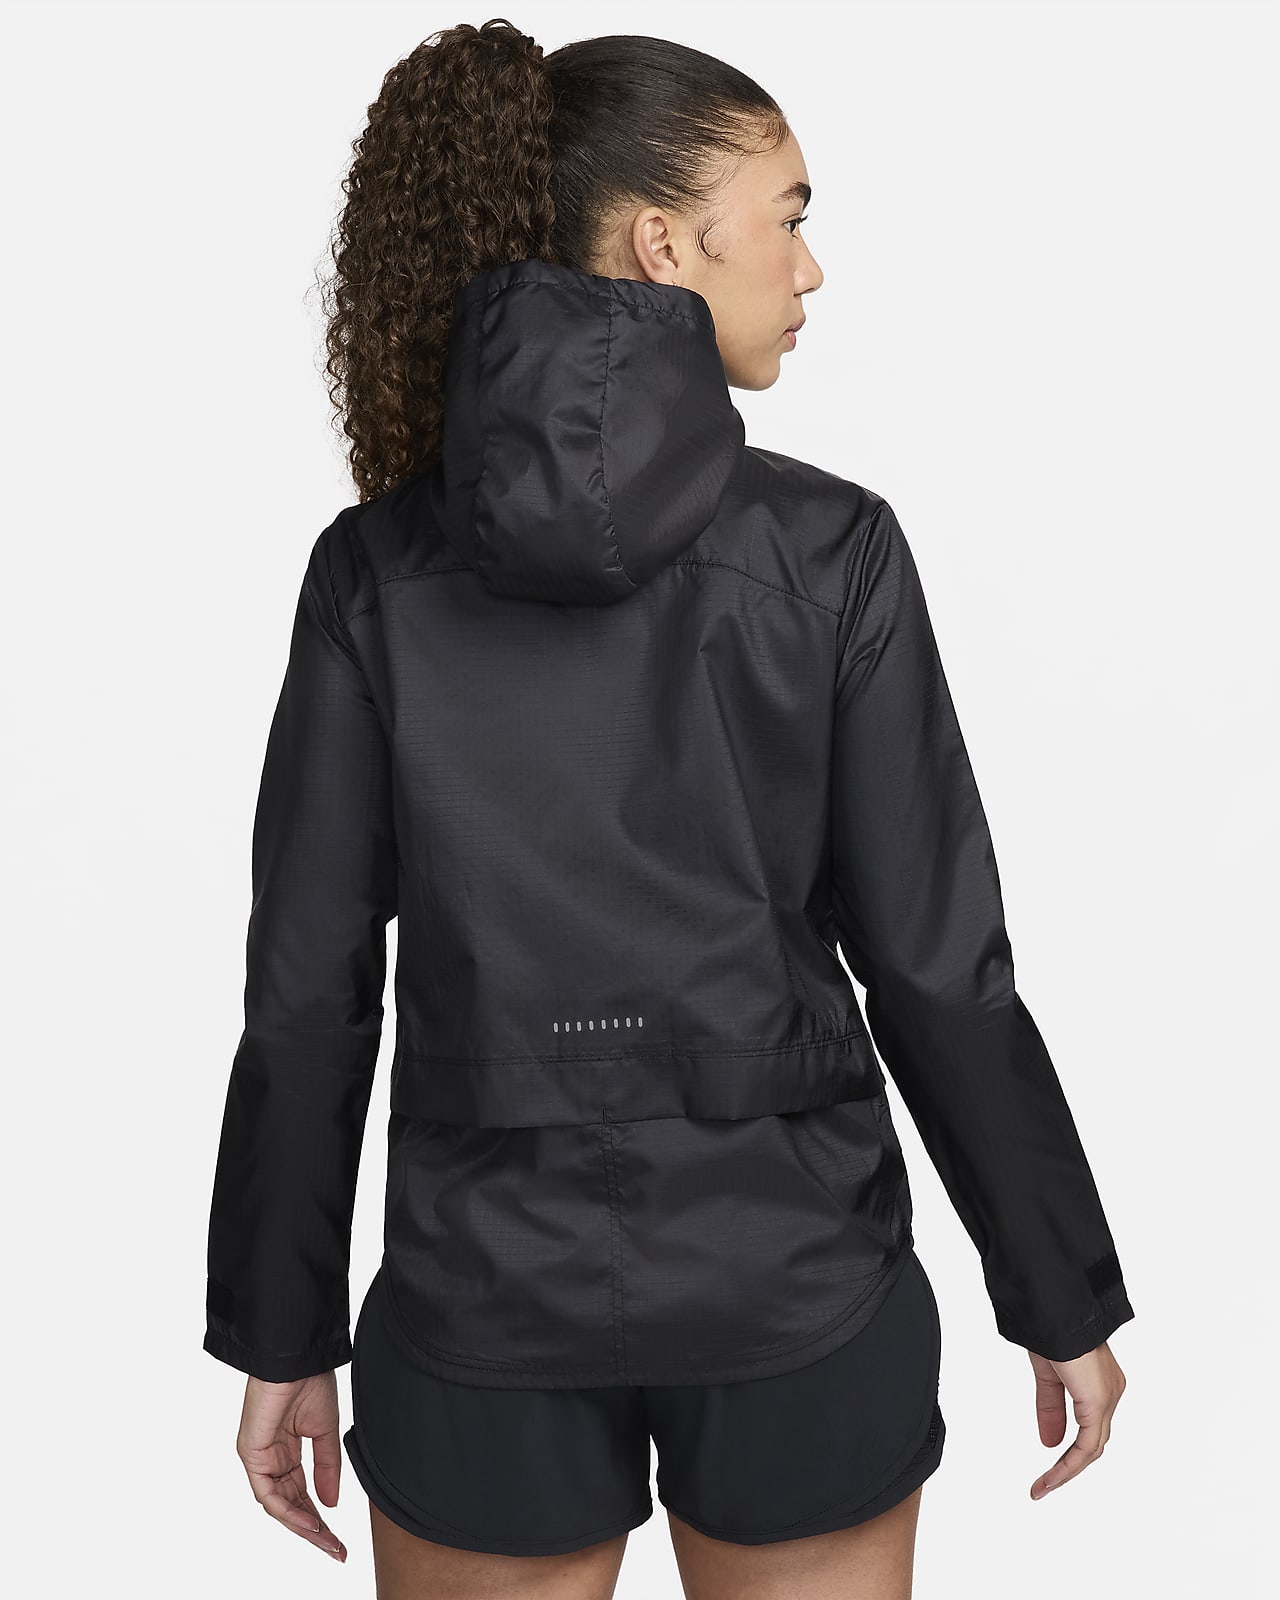 black nike running jacket womens